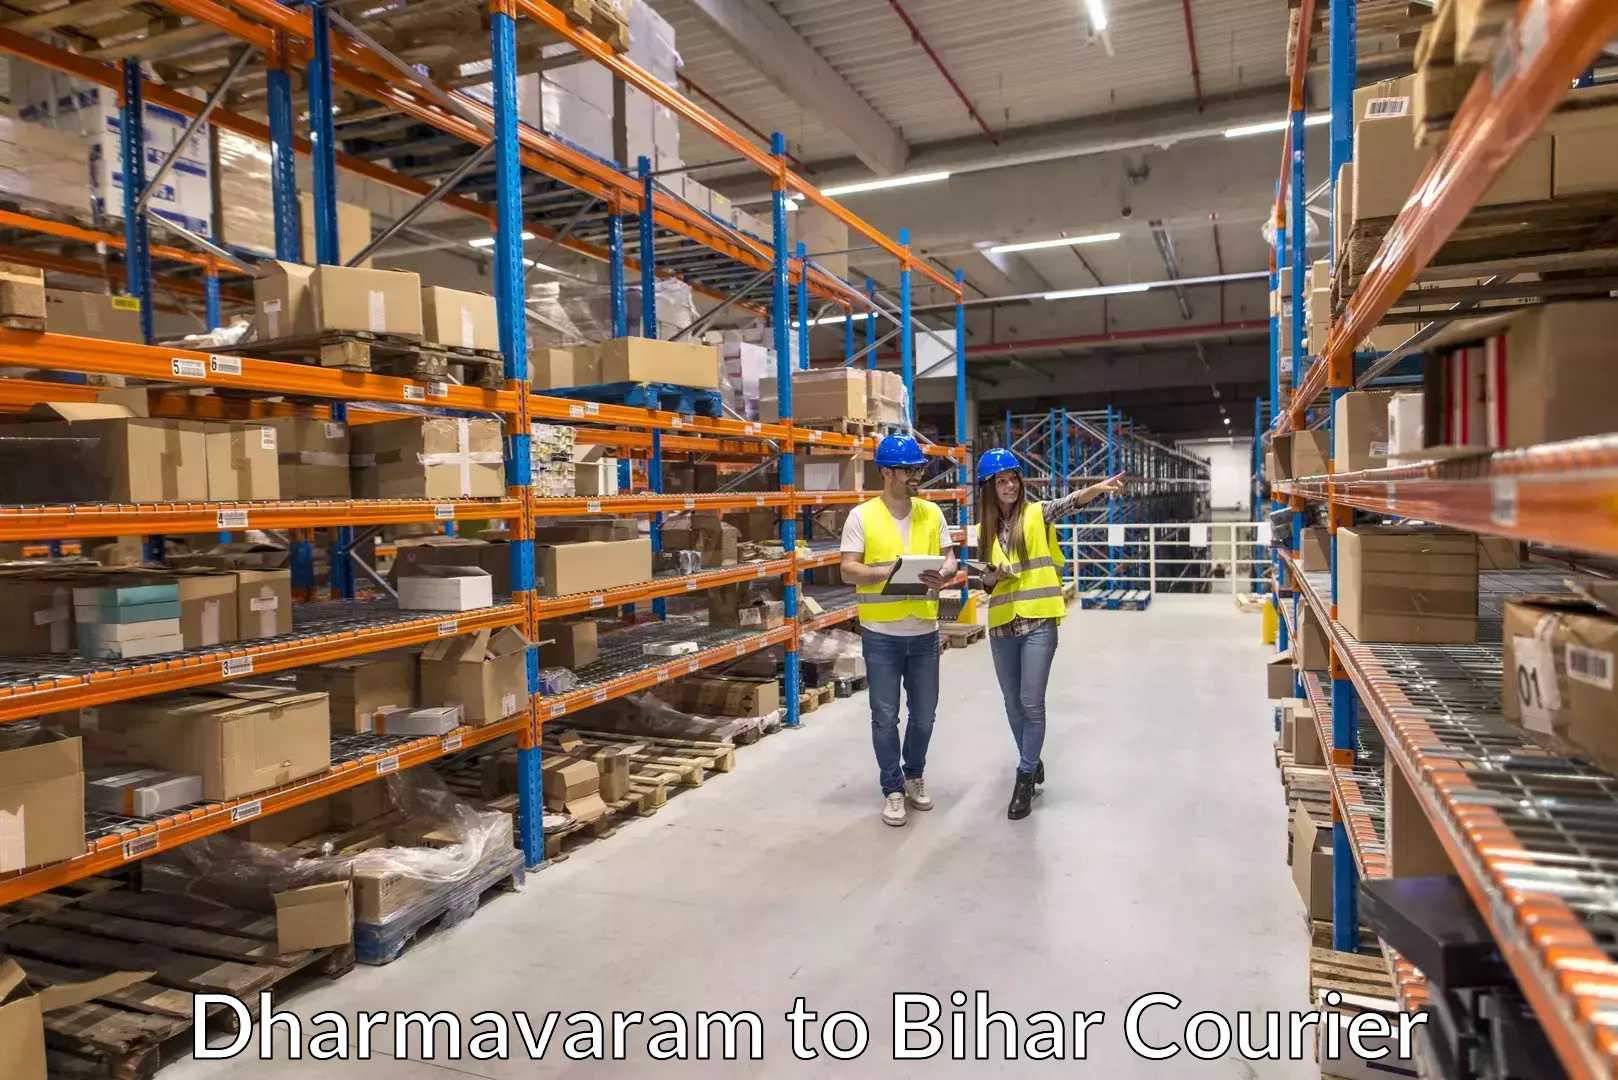 Trusted moving company Dharmavaram to Biraul